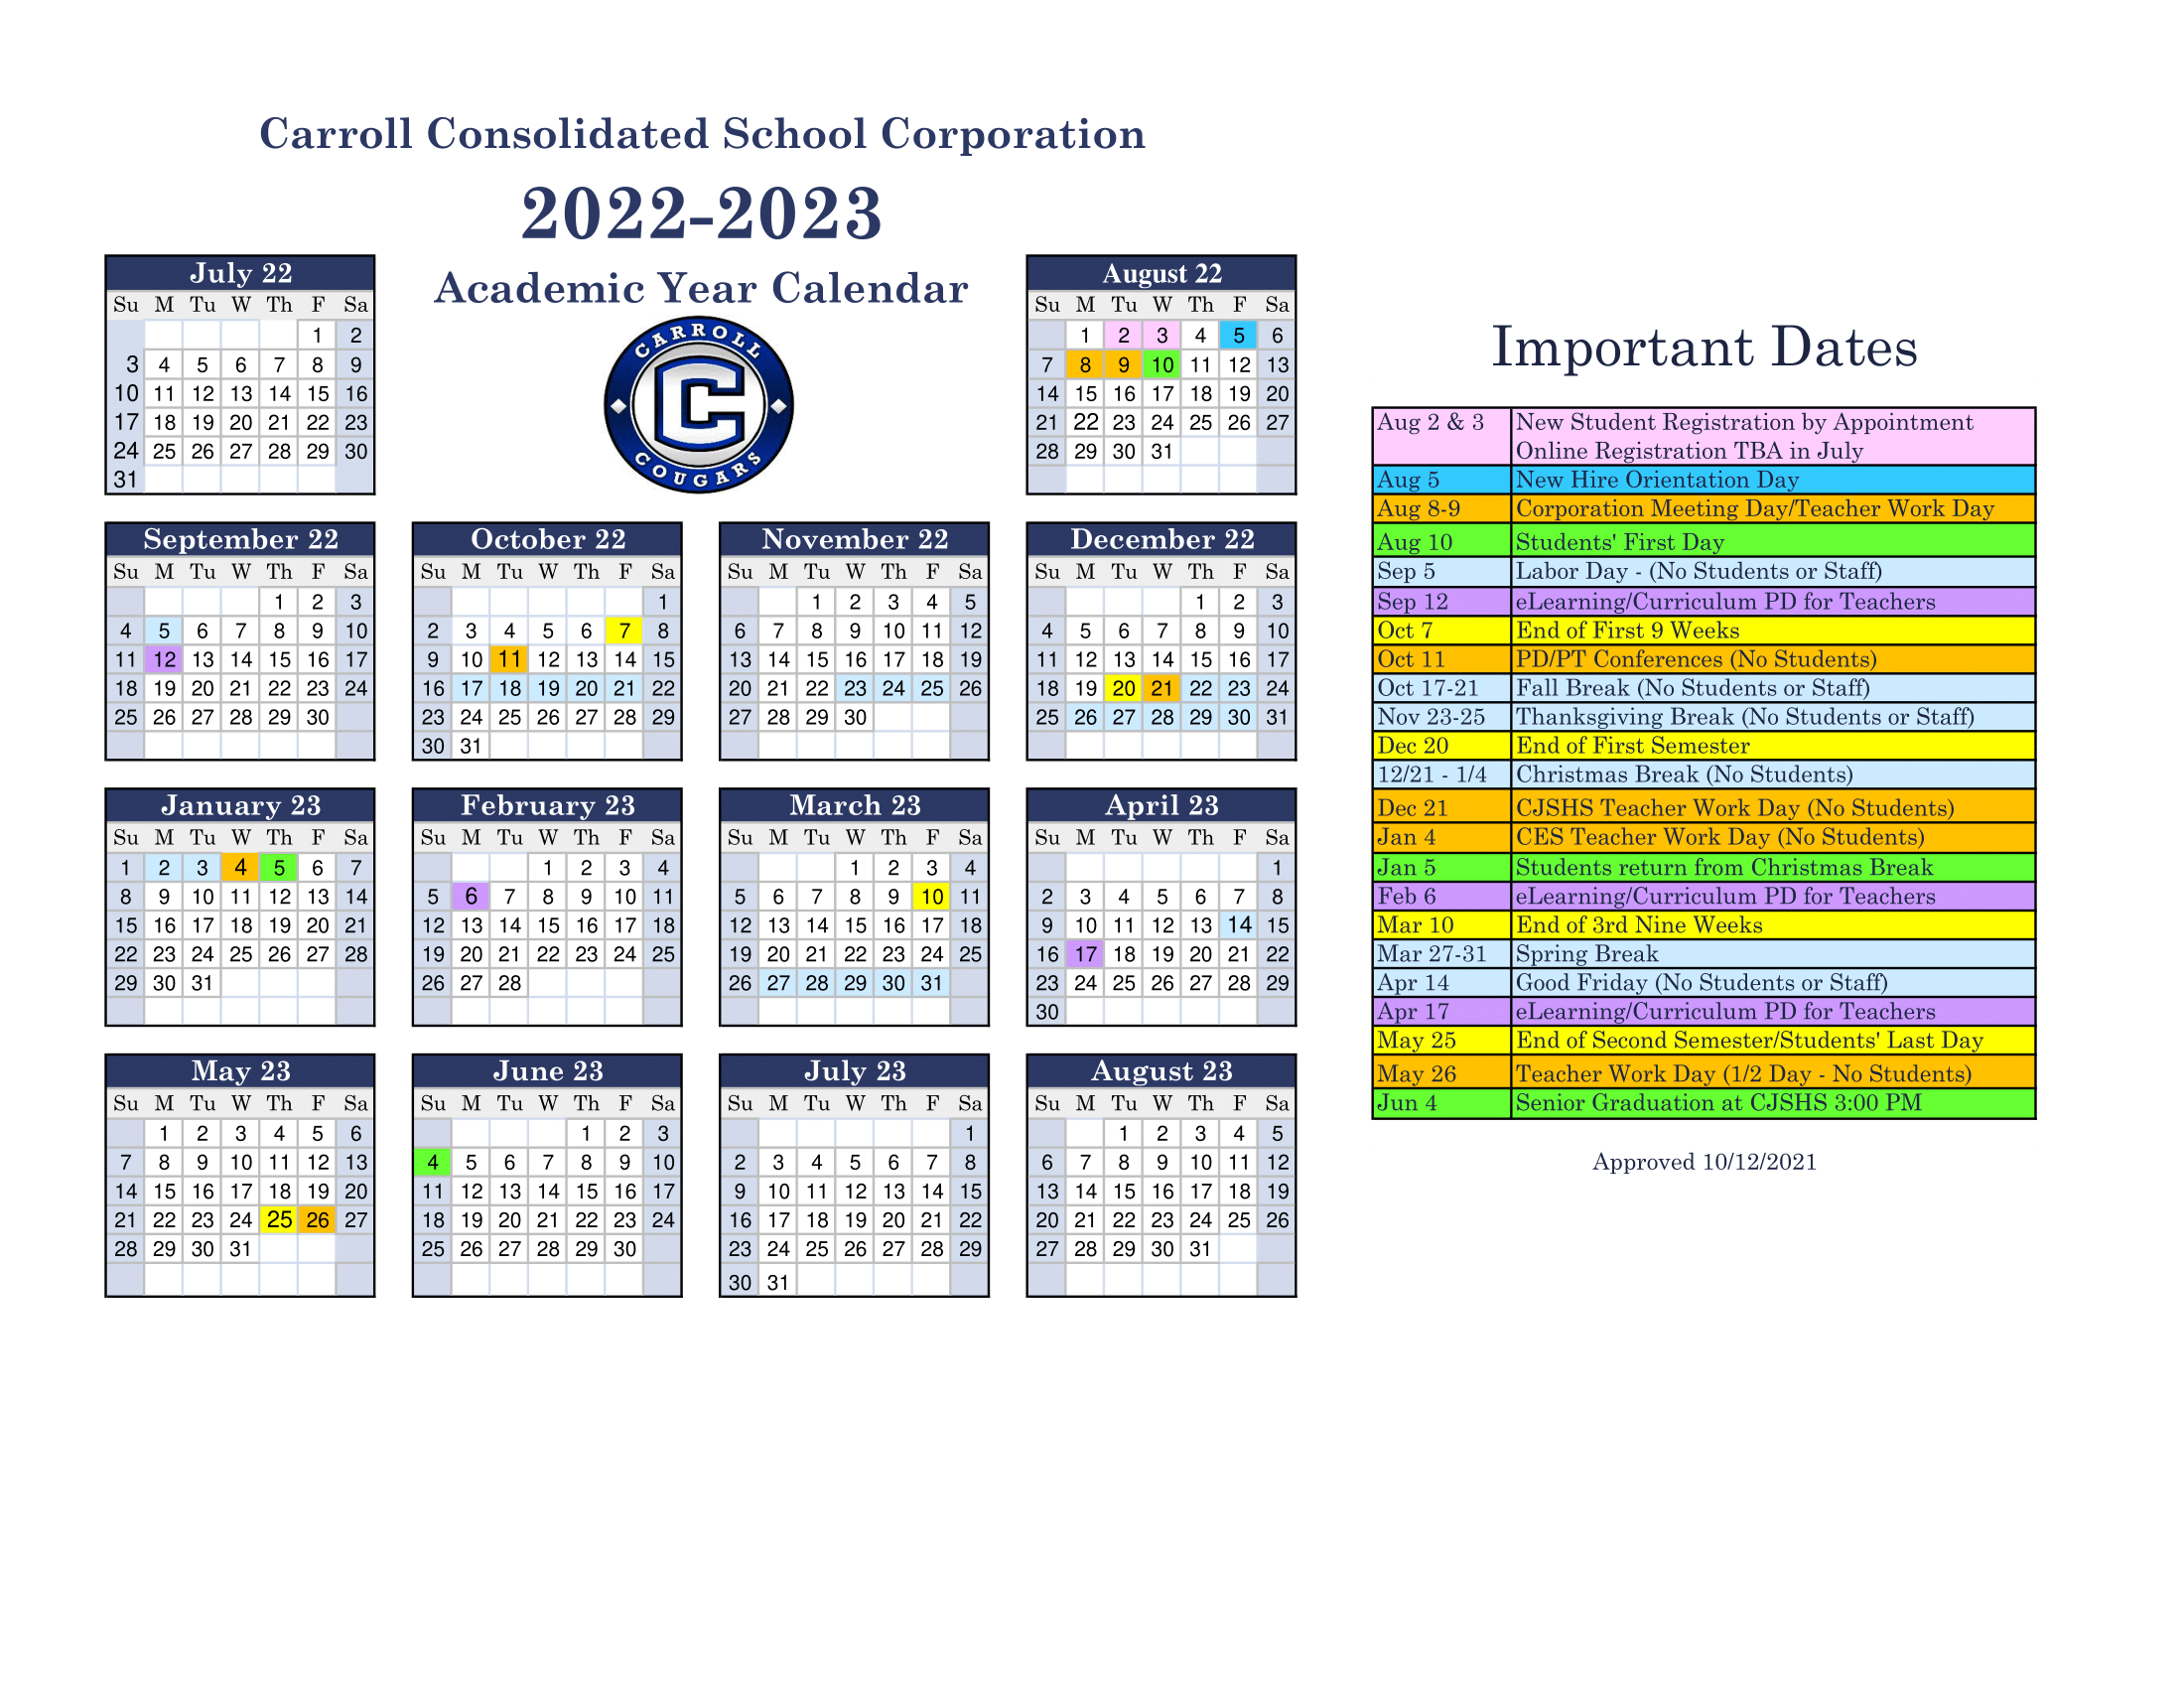 Carroll University Academic Calendar Printable Calendar 2023